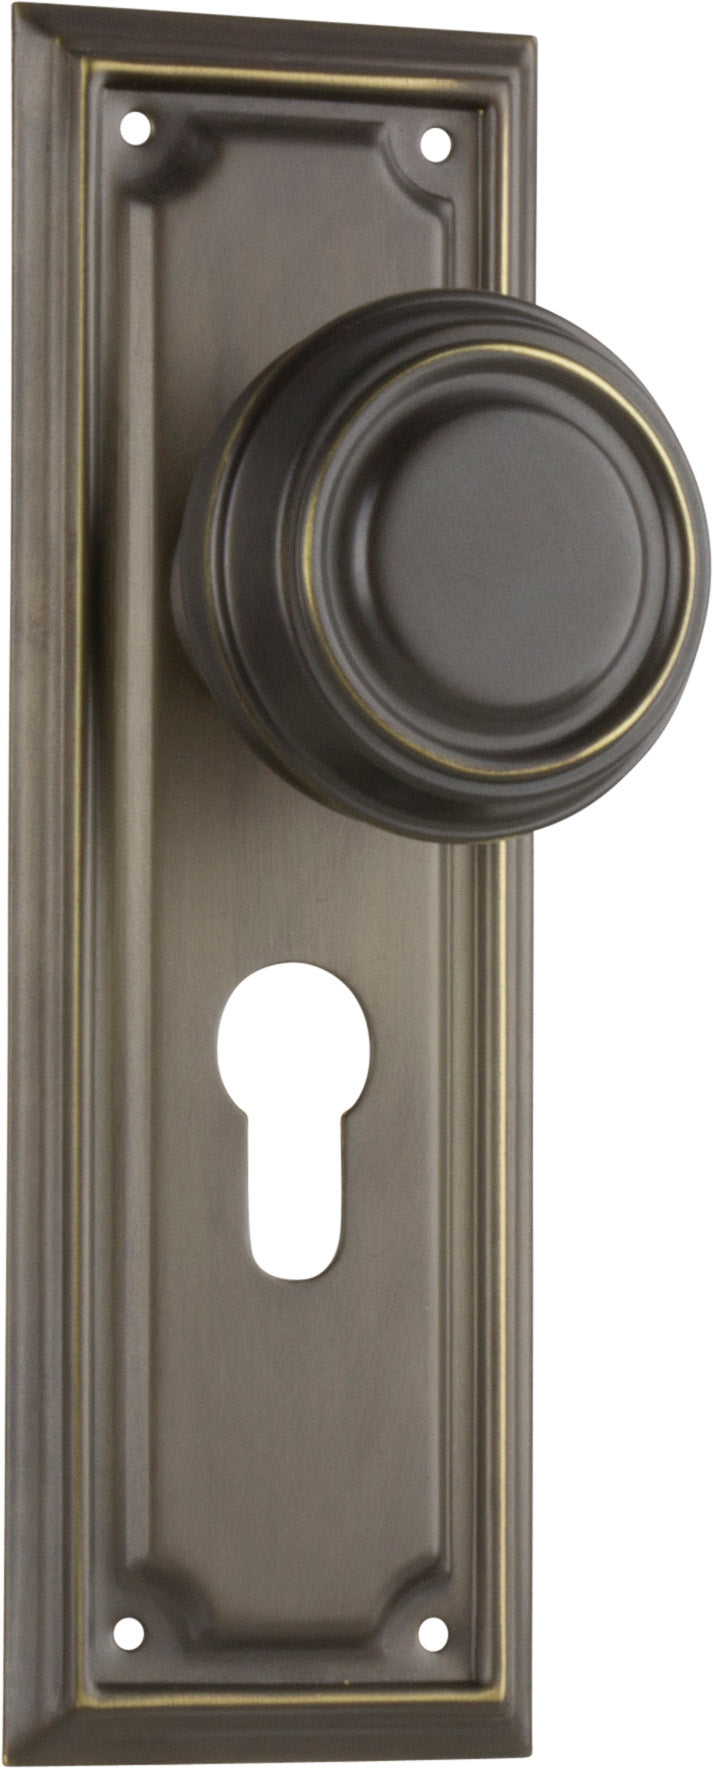 Edwardian Door Knob - Long Backplate by Tradco